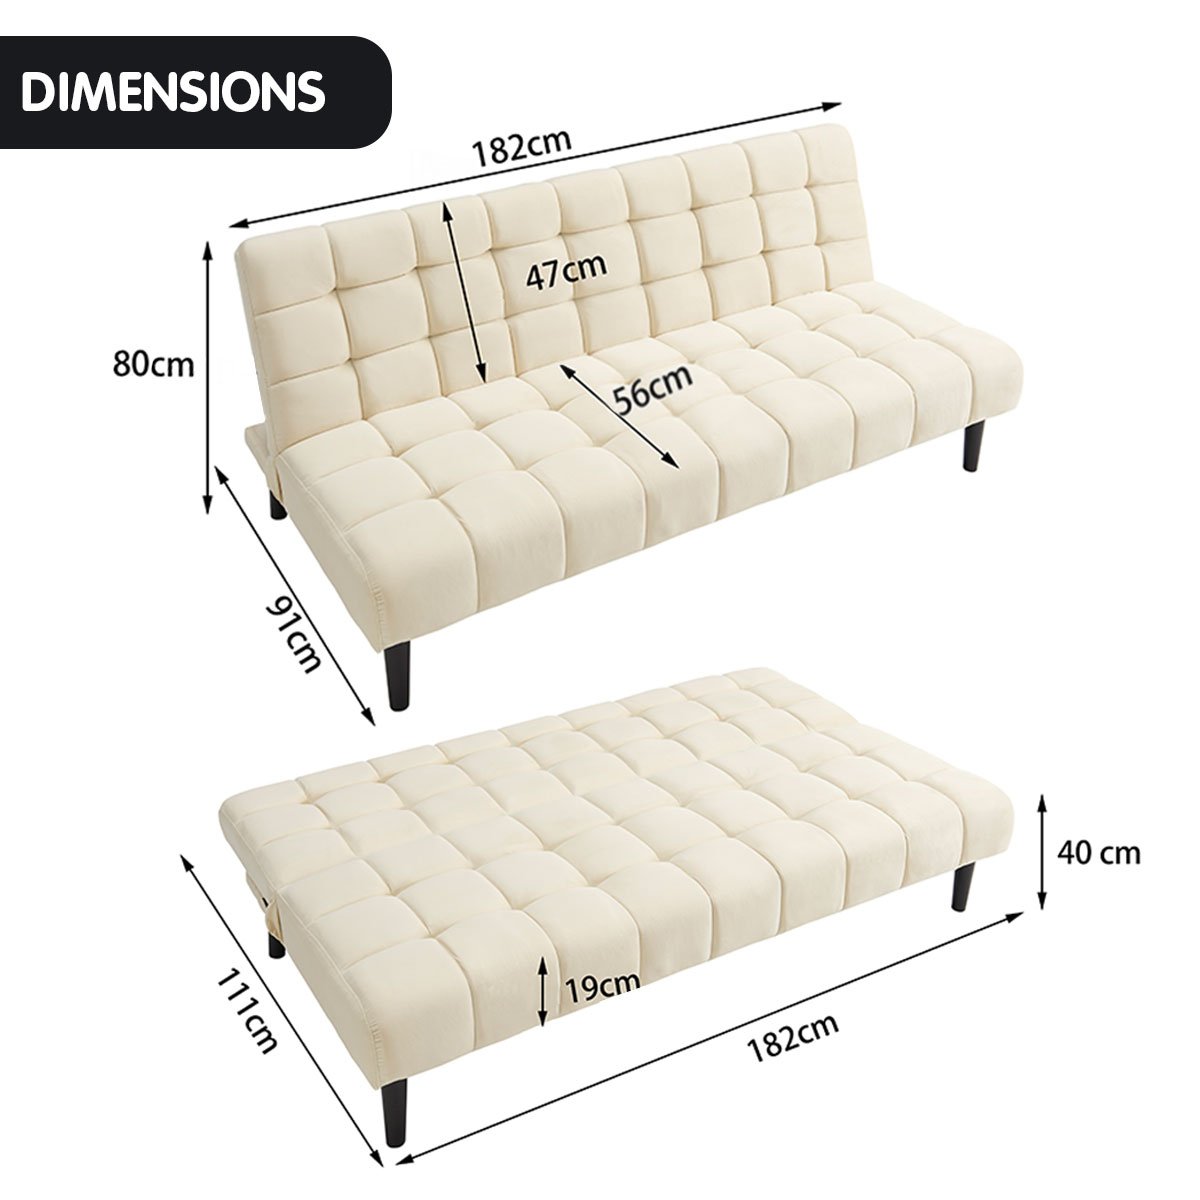 indoor furniture Suede Fabric Sofa Bed Furniture Lounge Seat Beige